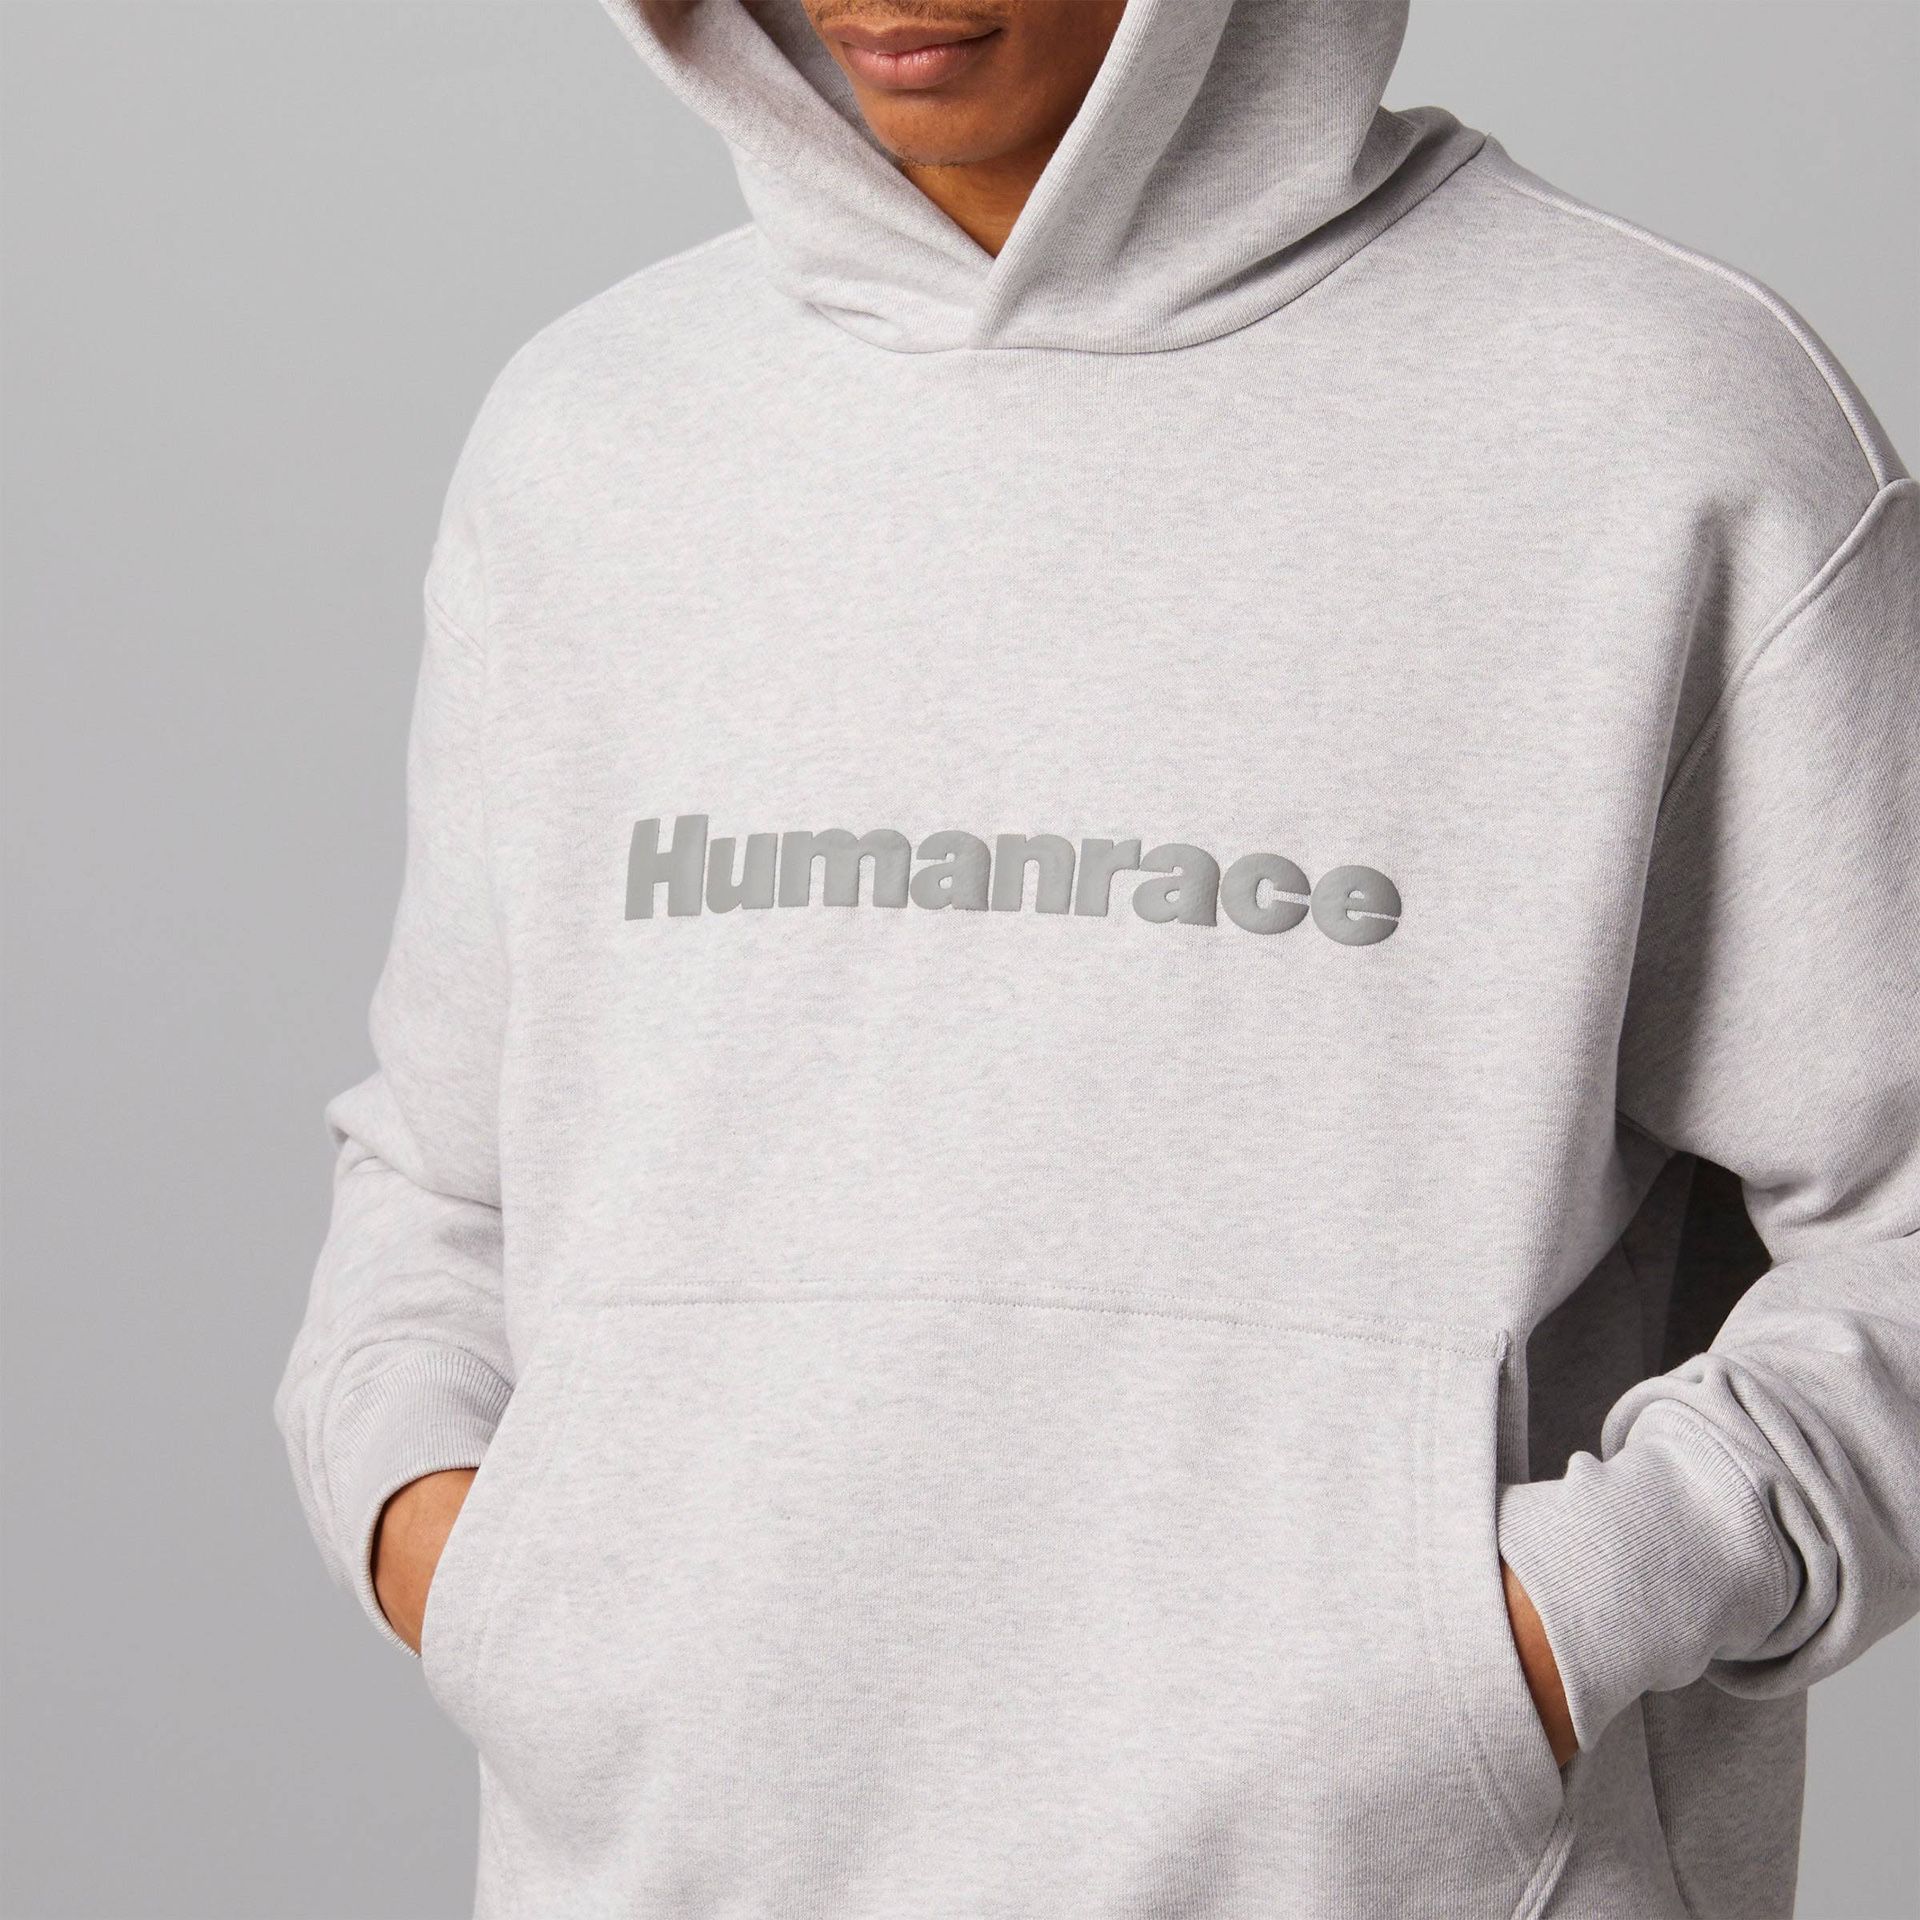 Adidas Human Race Hoodie Brand New Small Pharrell PW Yeezy Sweater Hoodie Y3 Jeremy Scott Made